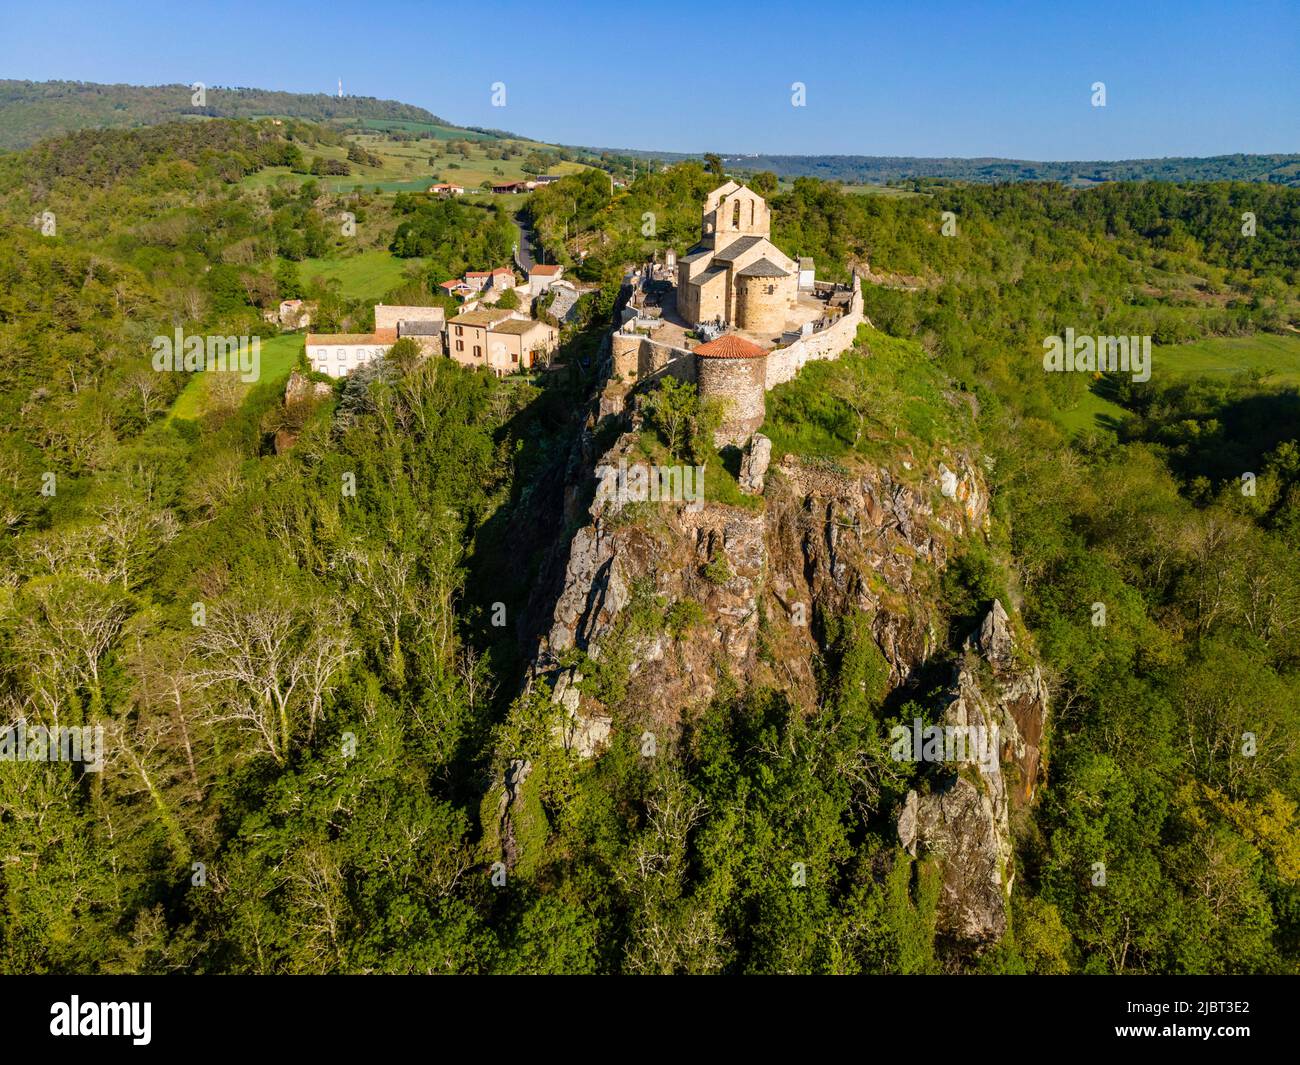 France, Puy de Dome, romanesque church of Saint Herent, Lembronnais, near Issoire (aerial view) Stock Photo